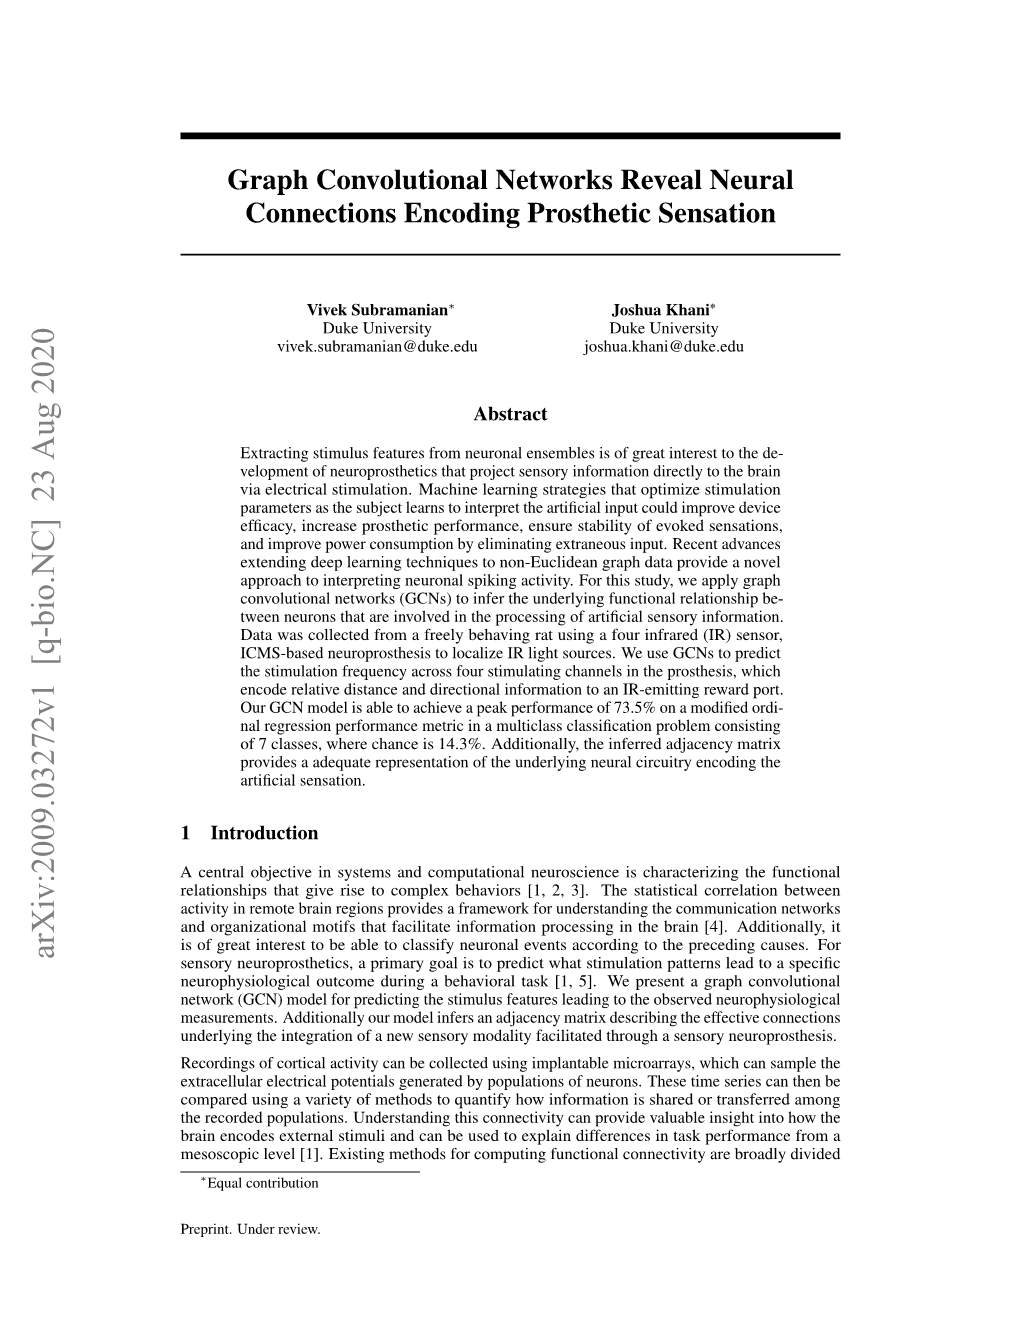 Graph Convolutional Networks Reveal Neural Connections Encoding Prosthetic Sensation